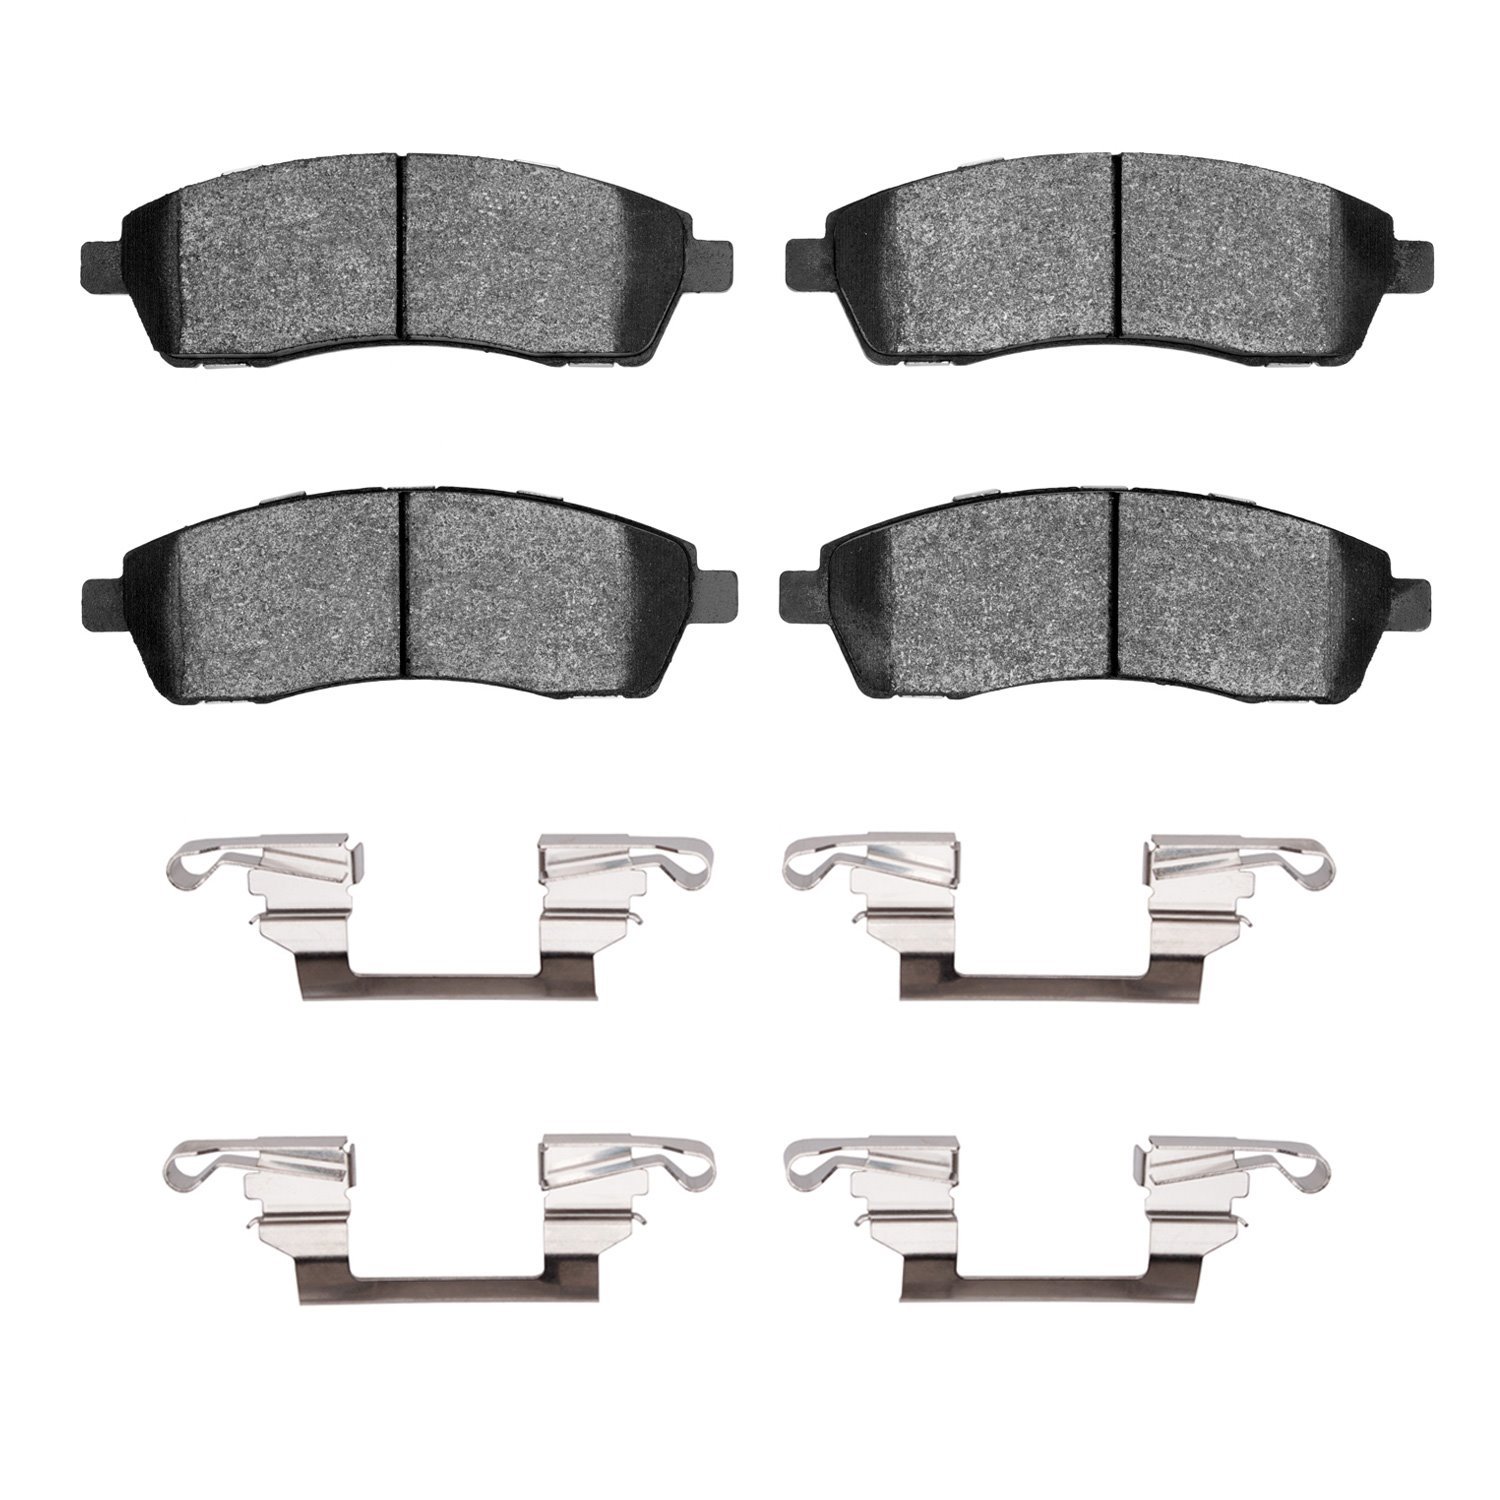 1310-0757-01 3000-Series Ceramic Brake Pads & Hardware Kit, 1999-2005 Ford/Lincoln/Mercury/Mazda, Position: Rear